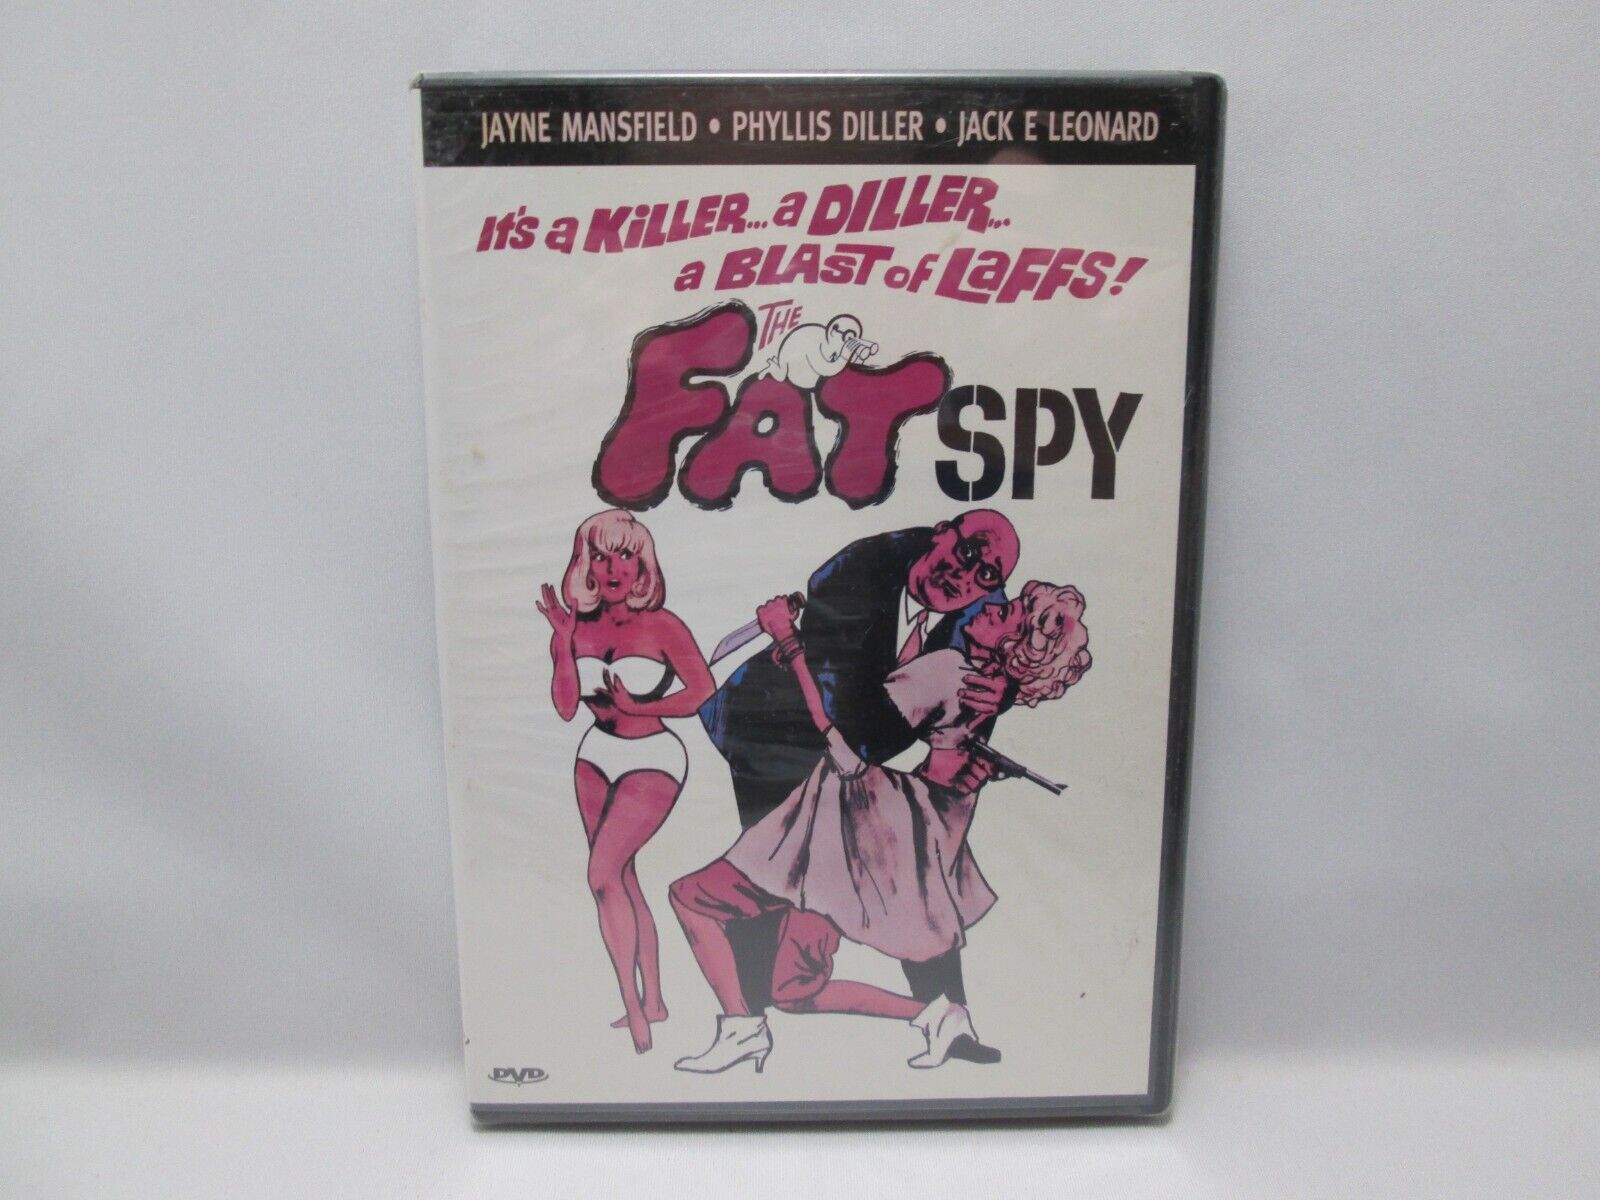 The Fat Spy  (2004 DVD) Jayne Mansfield, Phyllis Diller  – Sealed